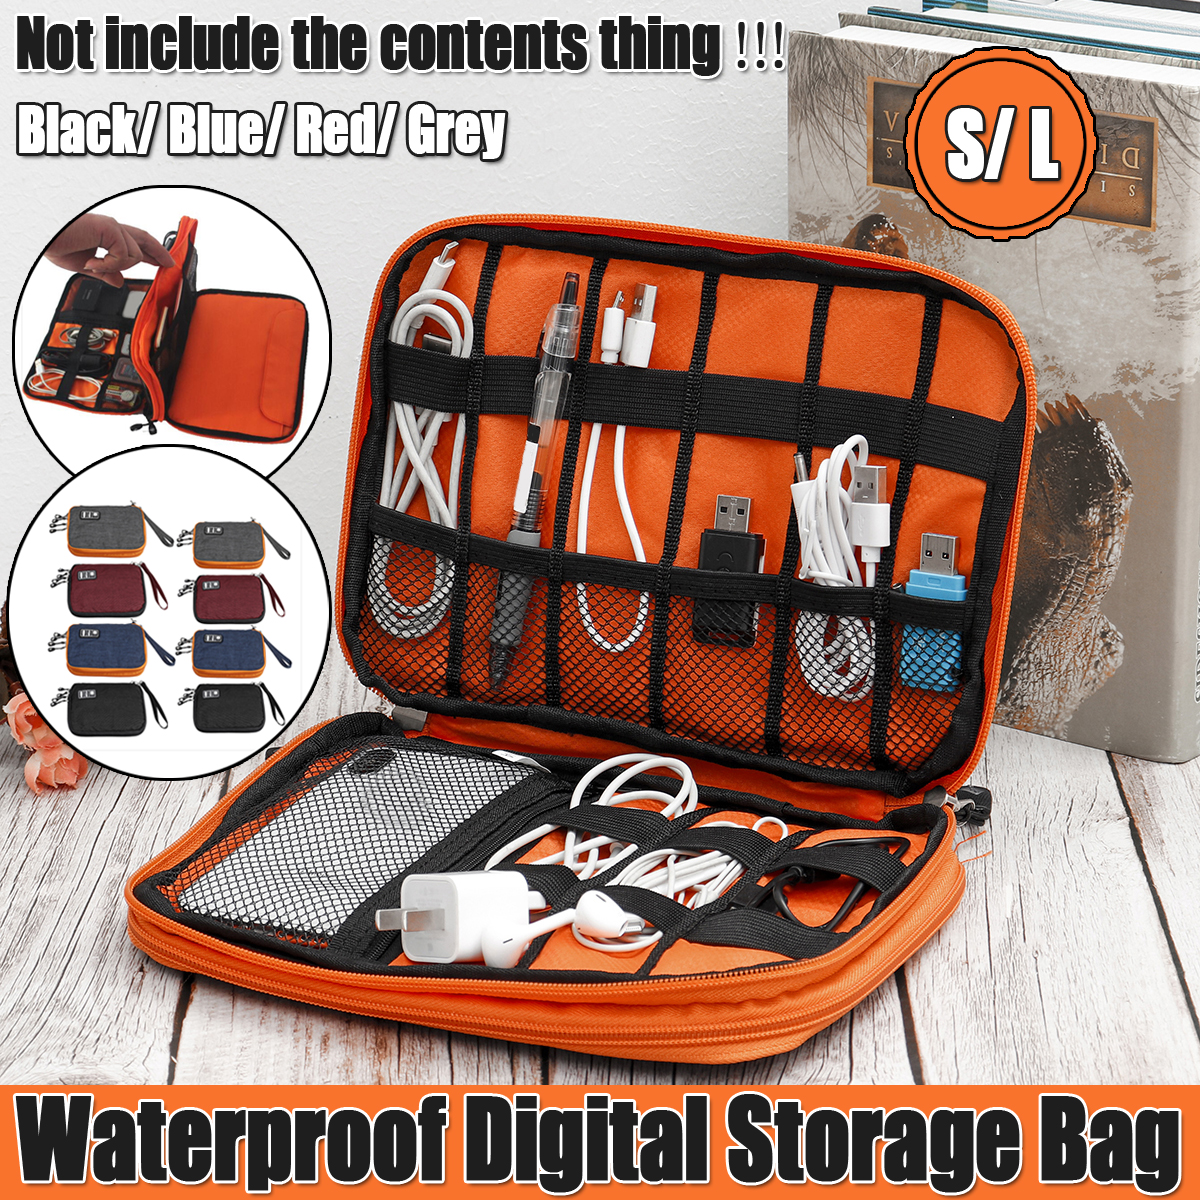 Waterproof-Digital-Accessories-Storage-Bag-USB-Data-Cable-Earphone-Wire-Flash-Drive-Pen-Power-Bank-T-1617036-1